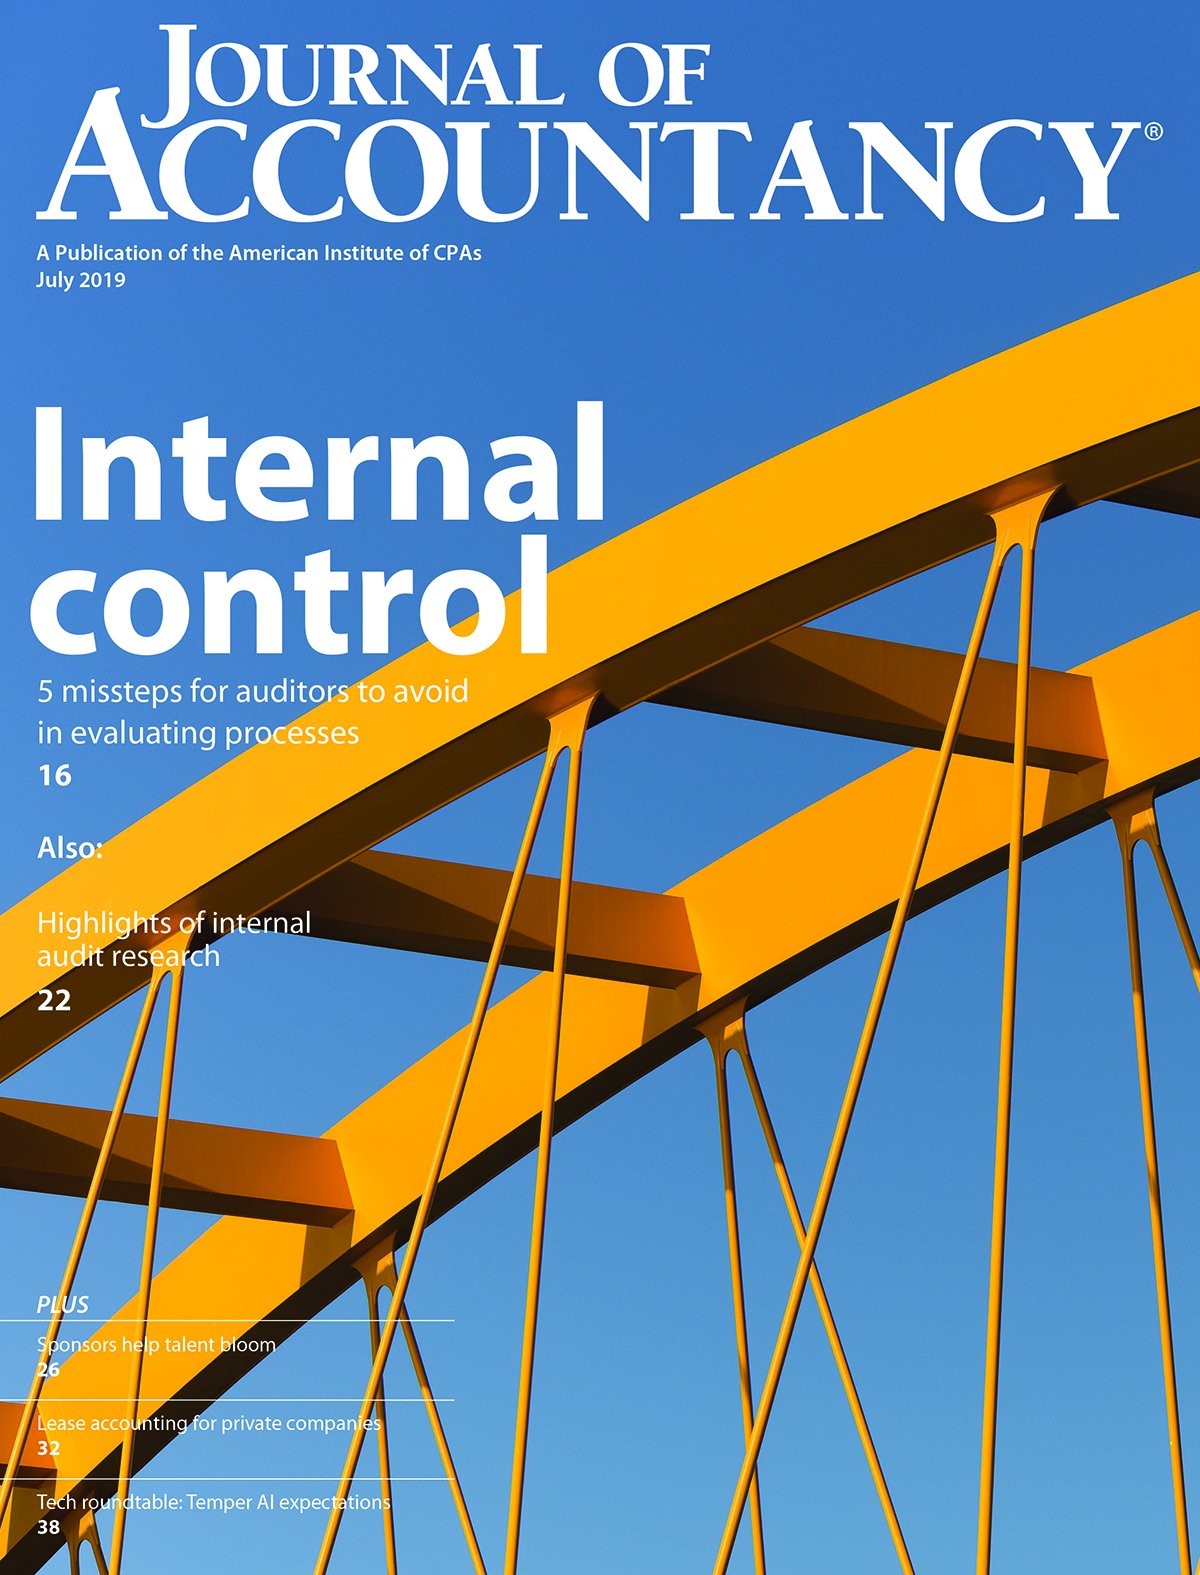 Journalofaccountancy On Twitter The July 2019 Issue Of The Journal Of Accountancy Is Now Available Online Read It Now At Https T Co Kajuqxffqw